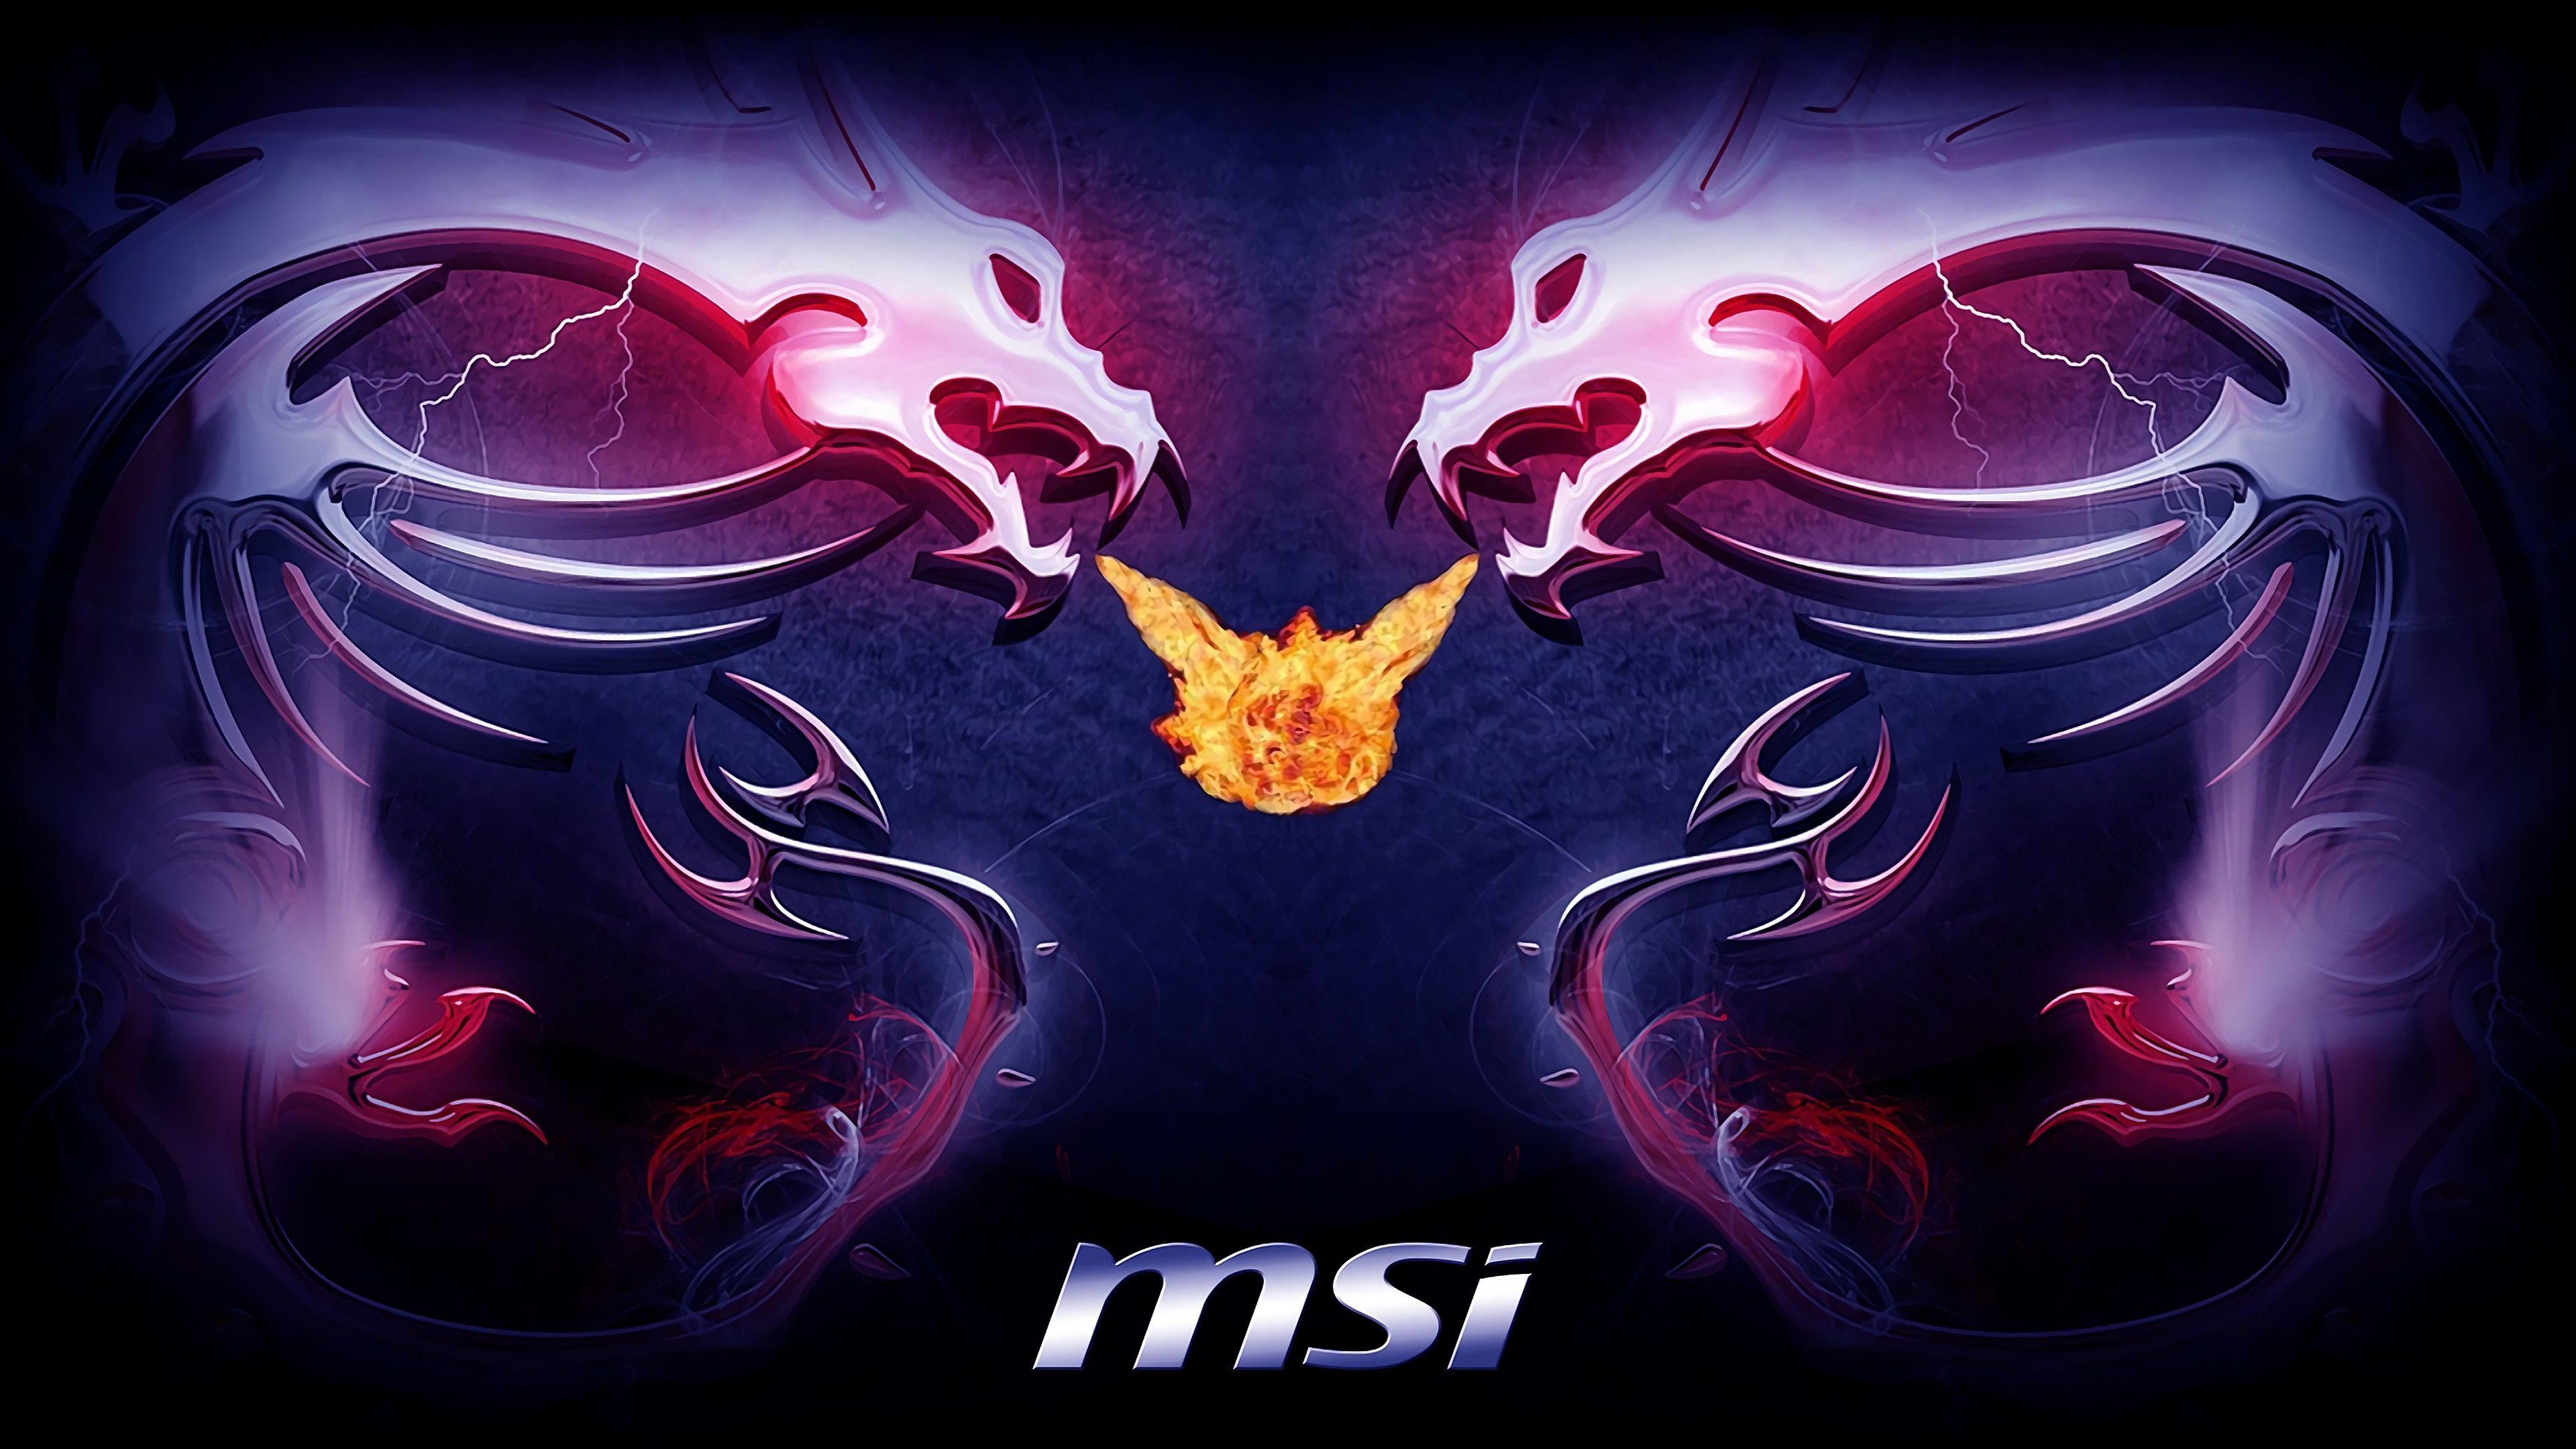 MSI Logo - MSI Logo Dragon 4k wallpaper | Gamers room in 2019 | Wallpaper ...